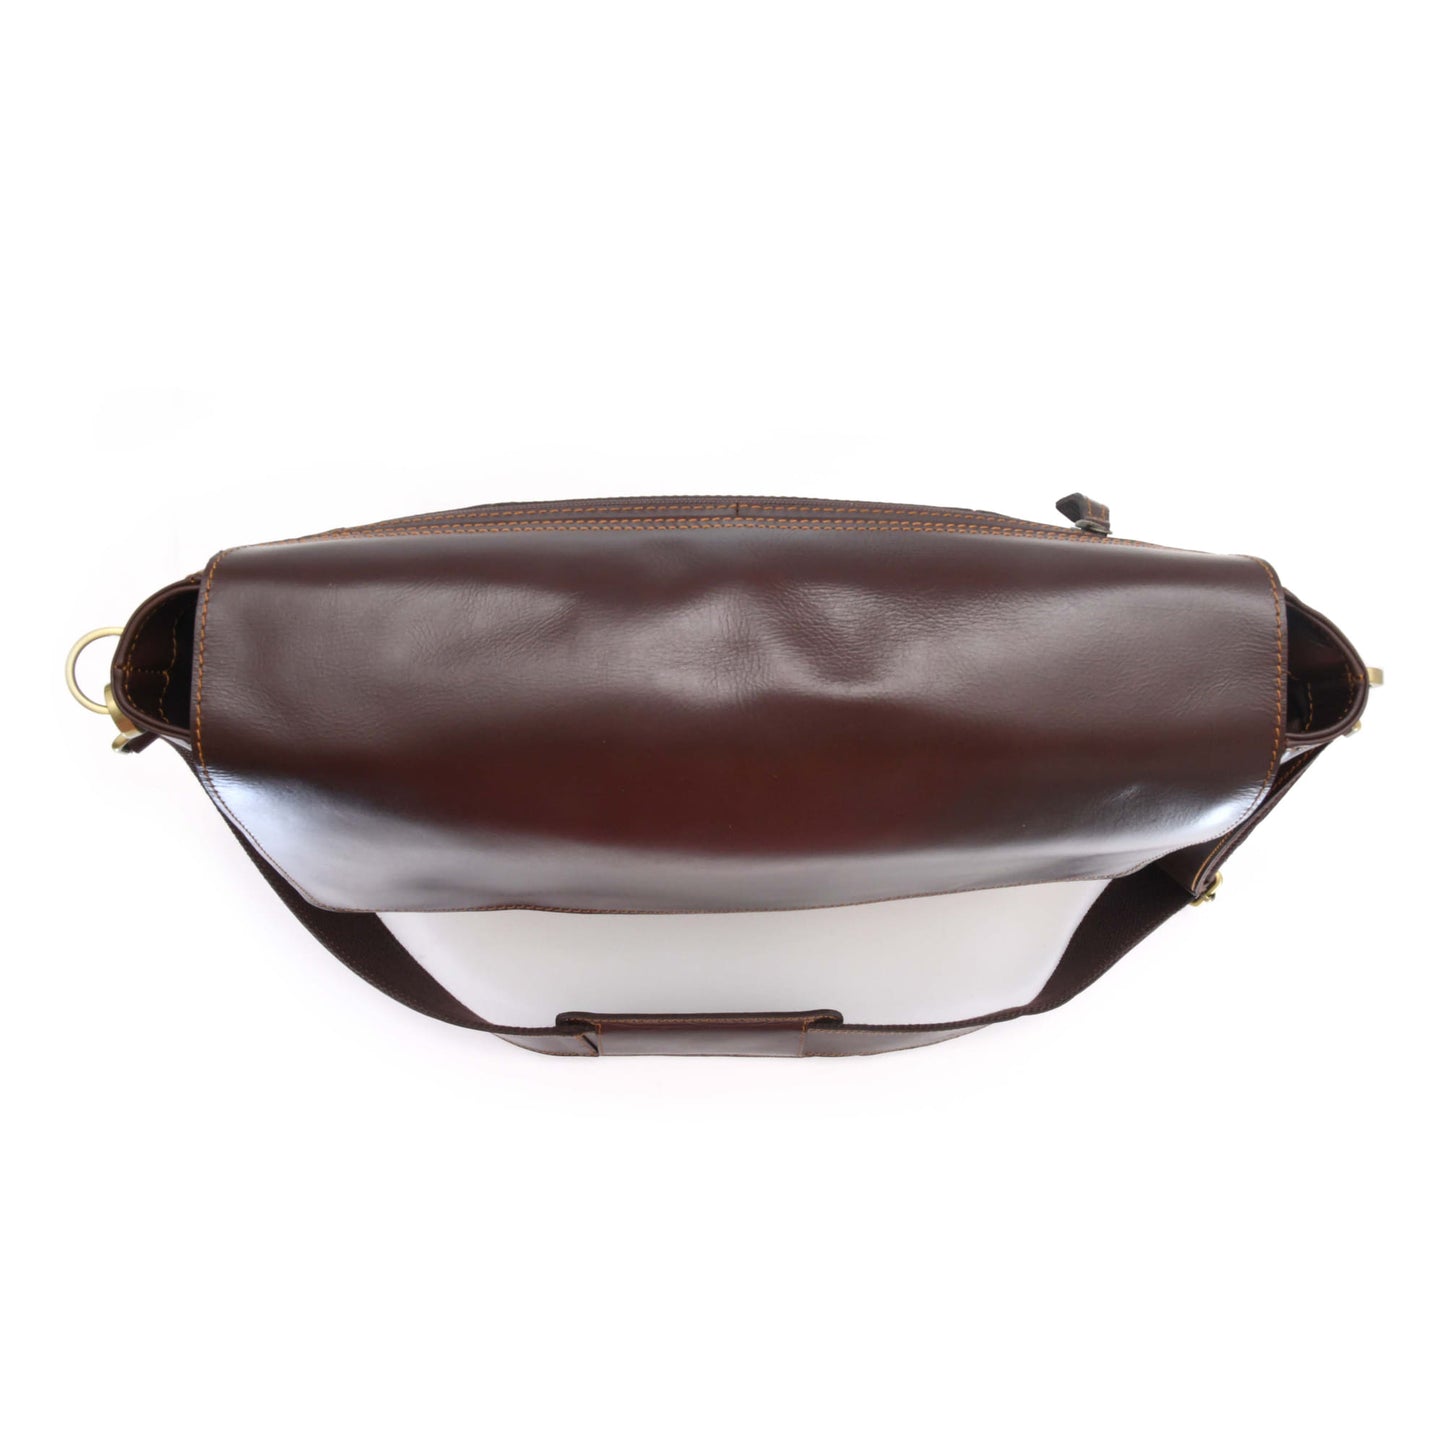 Style n Craft 392005 Messenger Bag in Full Grain Dark Brown Leather - Top View